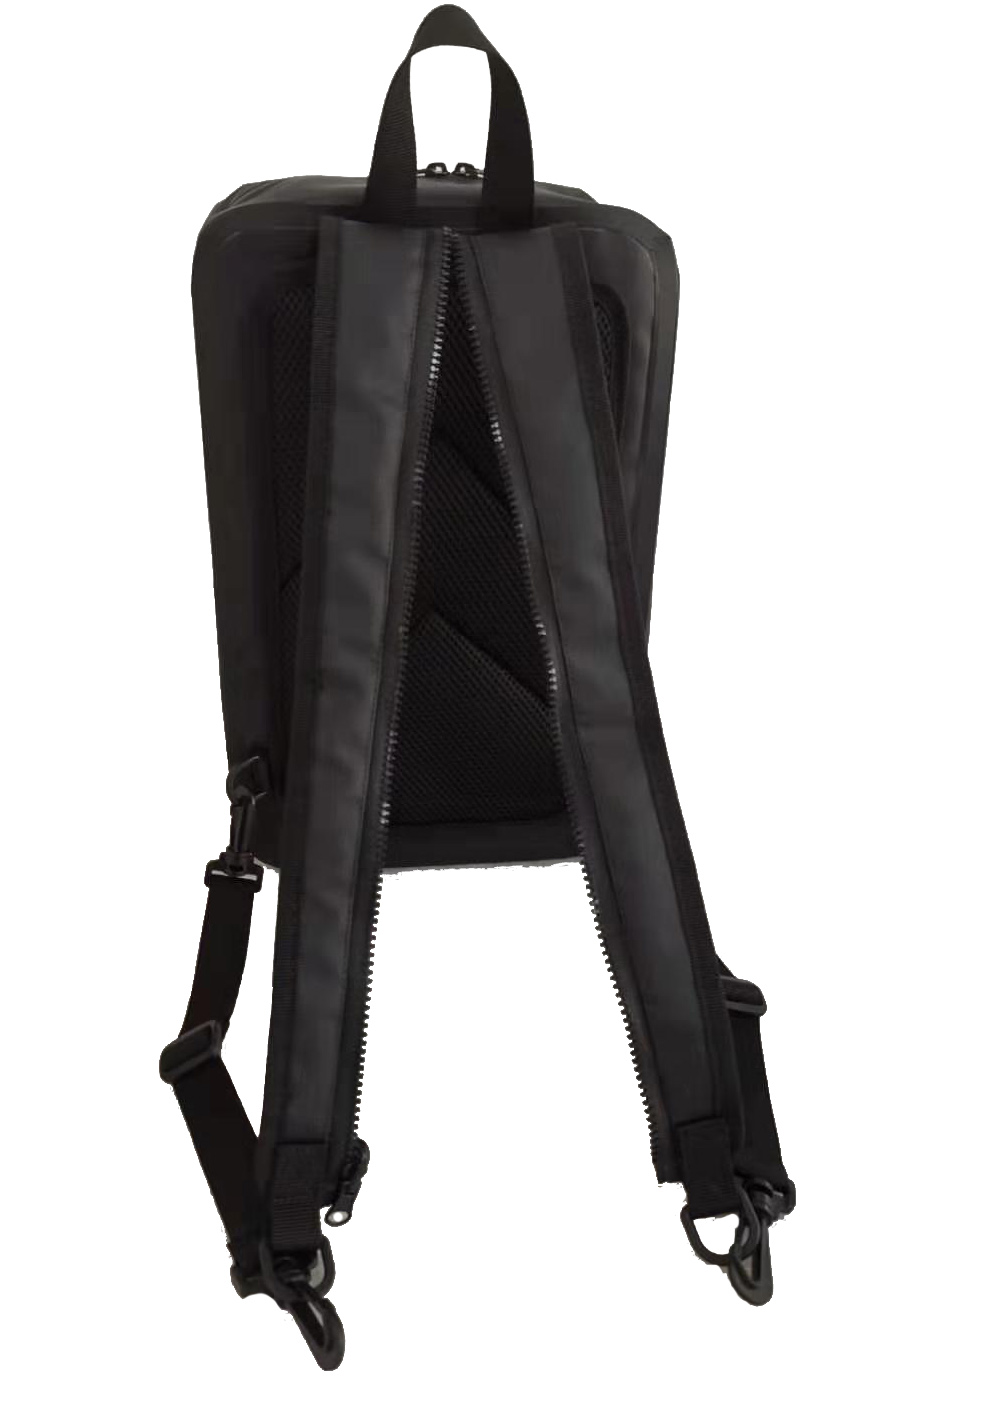 Durable Waterproof Chest Backpack Bag - 9 